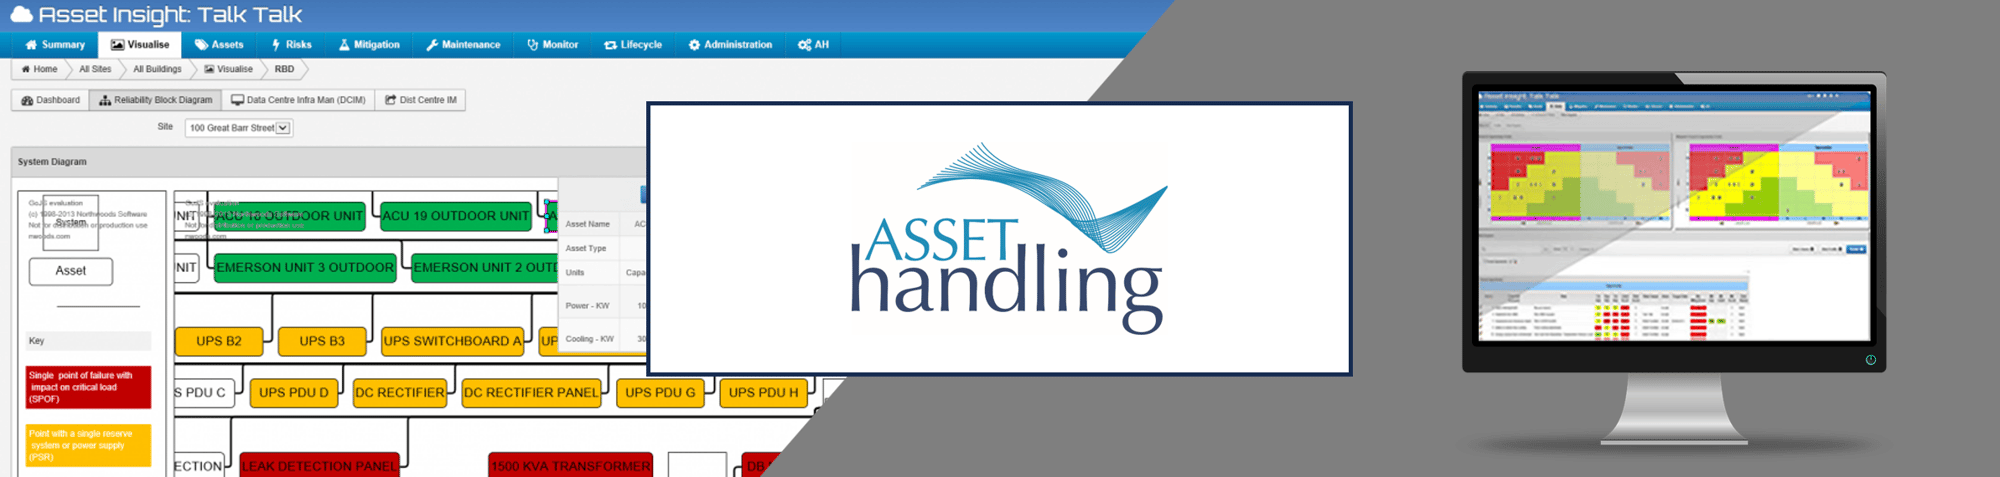 Banner - Asset Handling